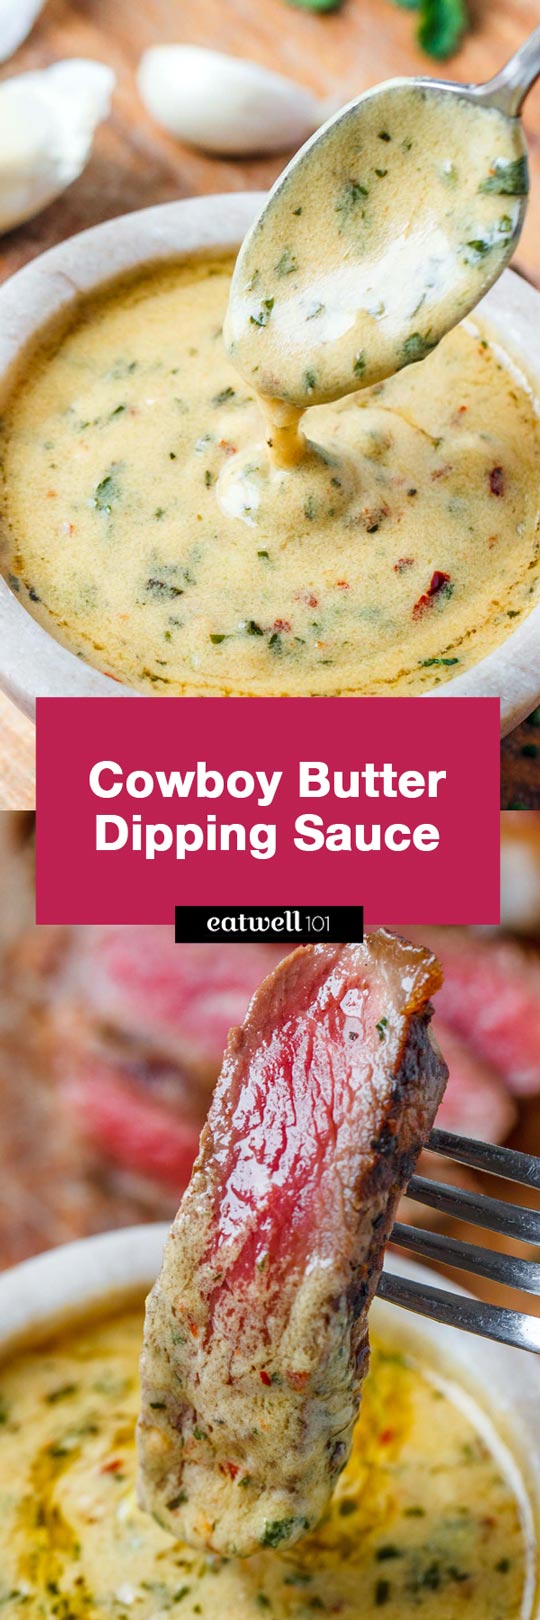 Cowboy Butter Dipping Sauce Recipe - #eatwell101 #recipe -  This garlic #butter #dipping #sauce is the bomb! 